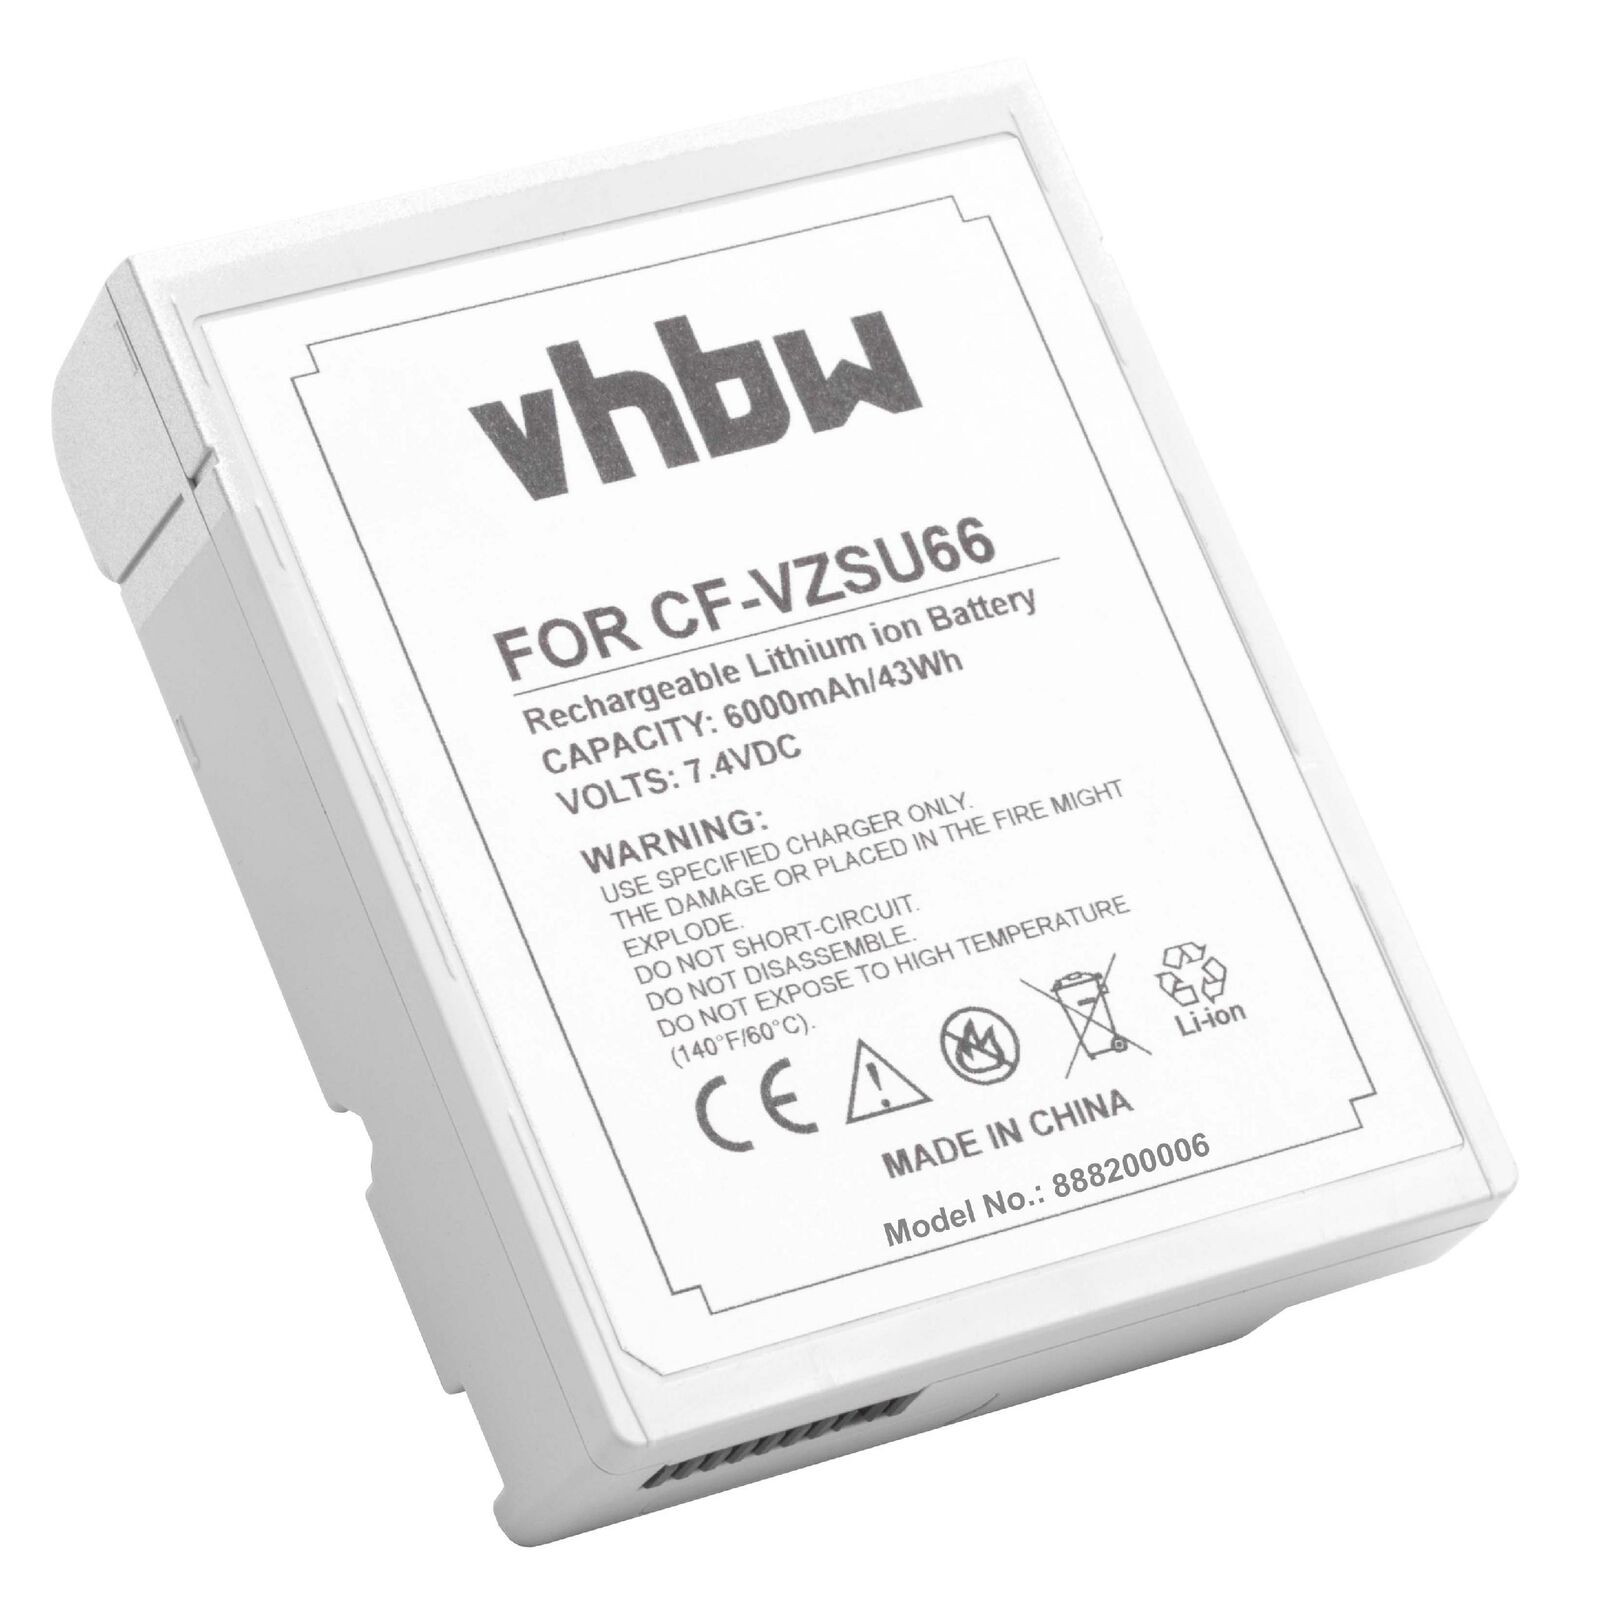 CF-VZSU66U Panasonic Toughbook CF-C1 CF-C1AT01GG replacement battery